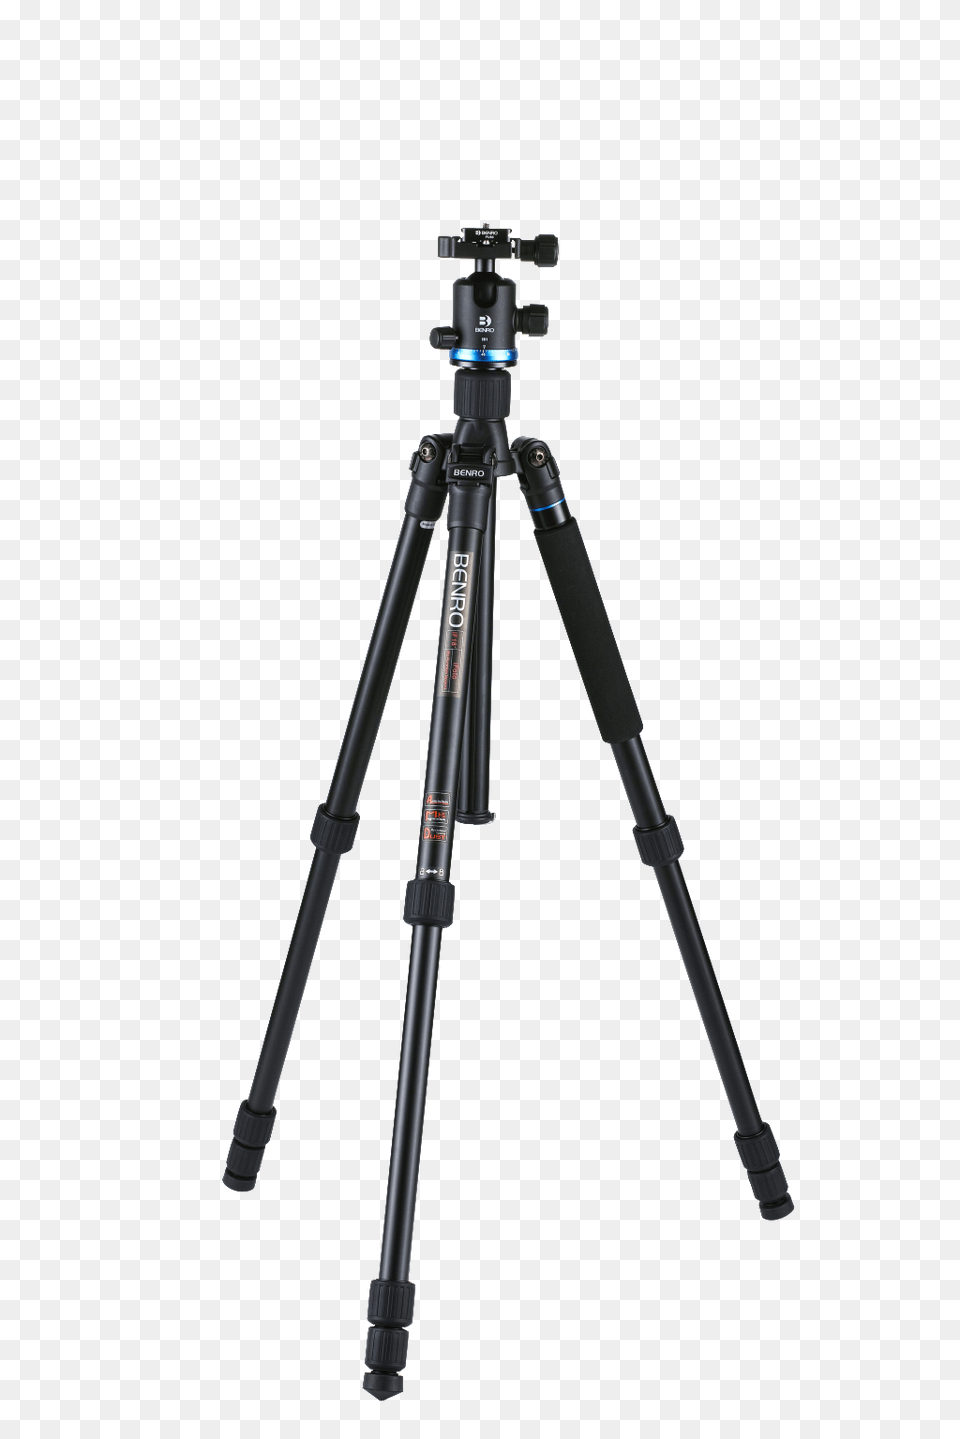 Camera Tripod Tripod Camera Stand Free Download Vector, Smoke Pipe Png Image